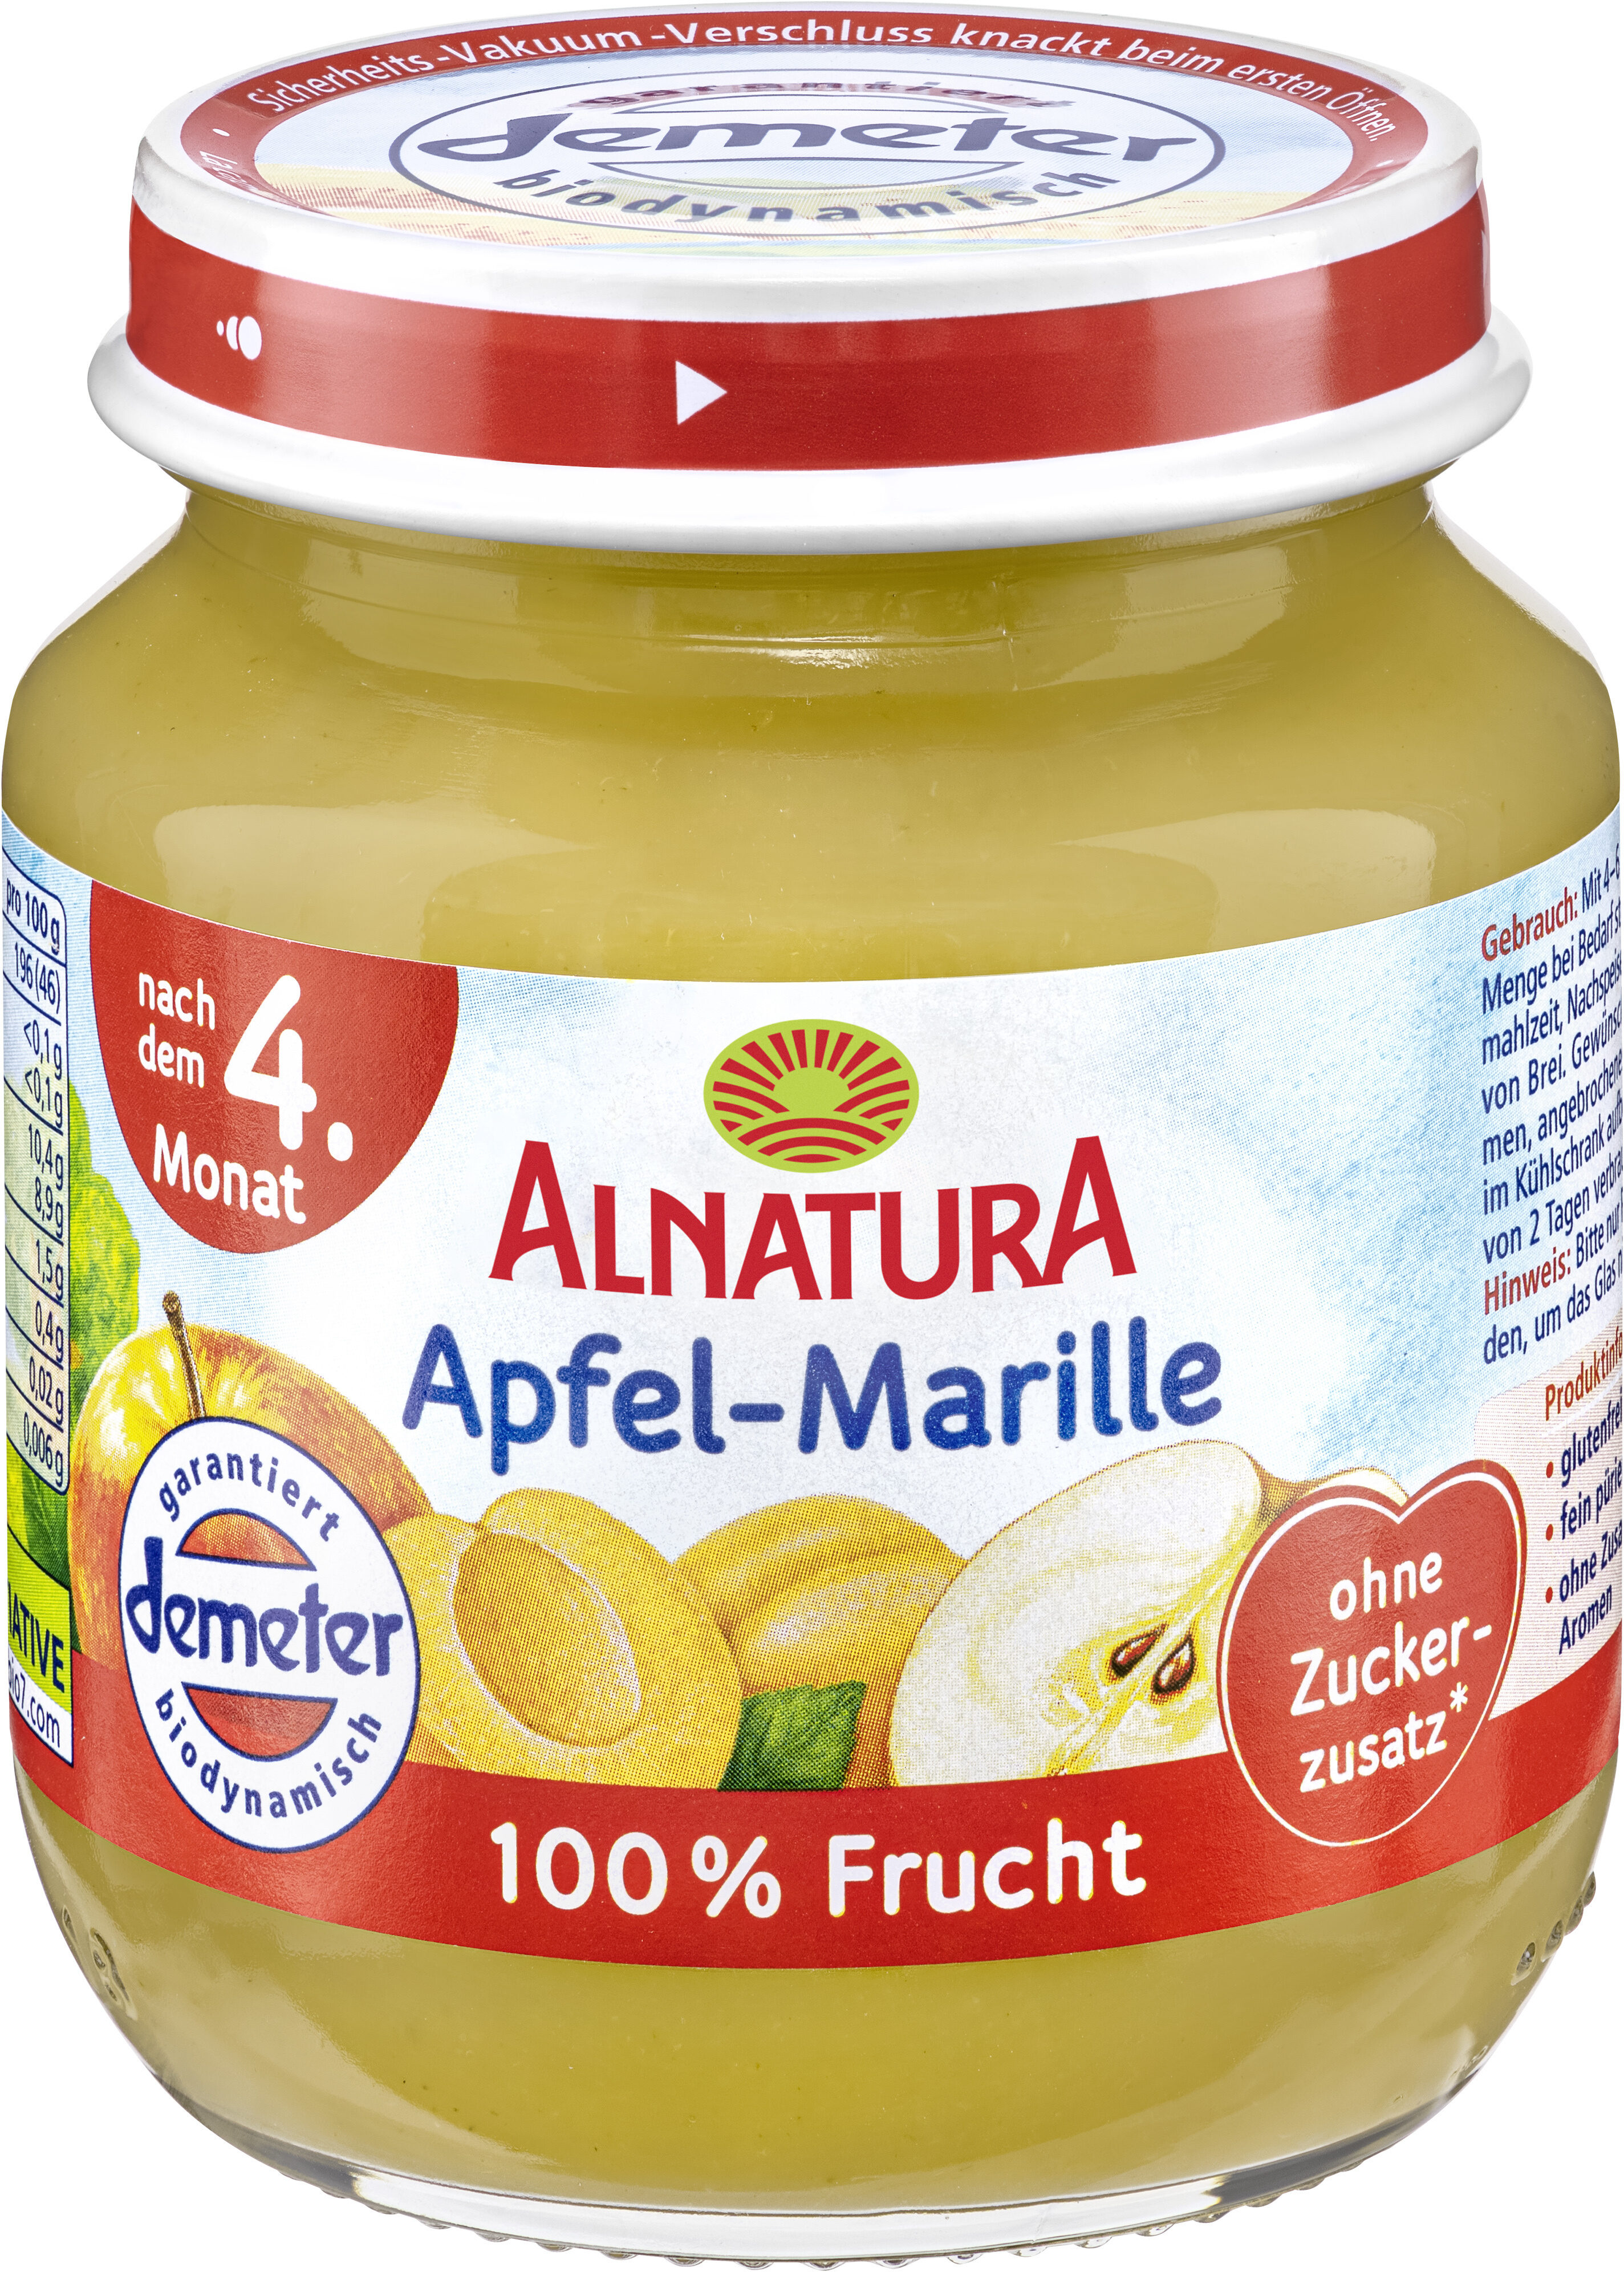 Apfel-Marille - Product